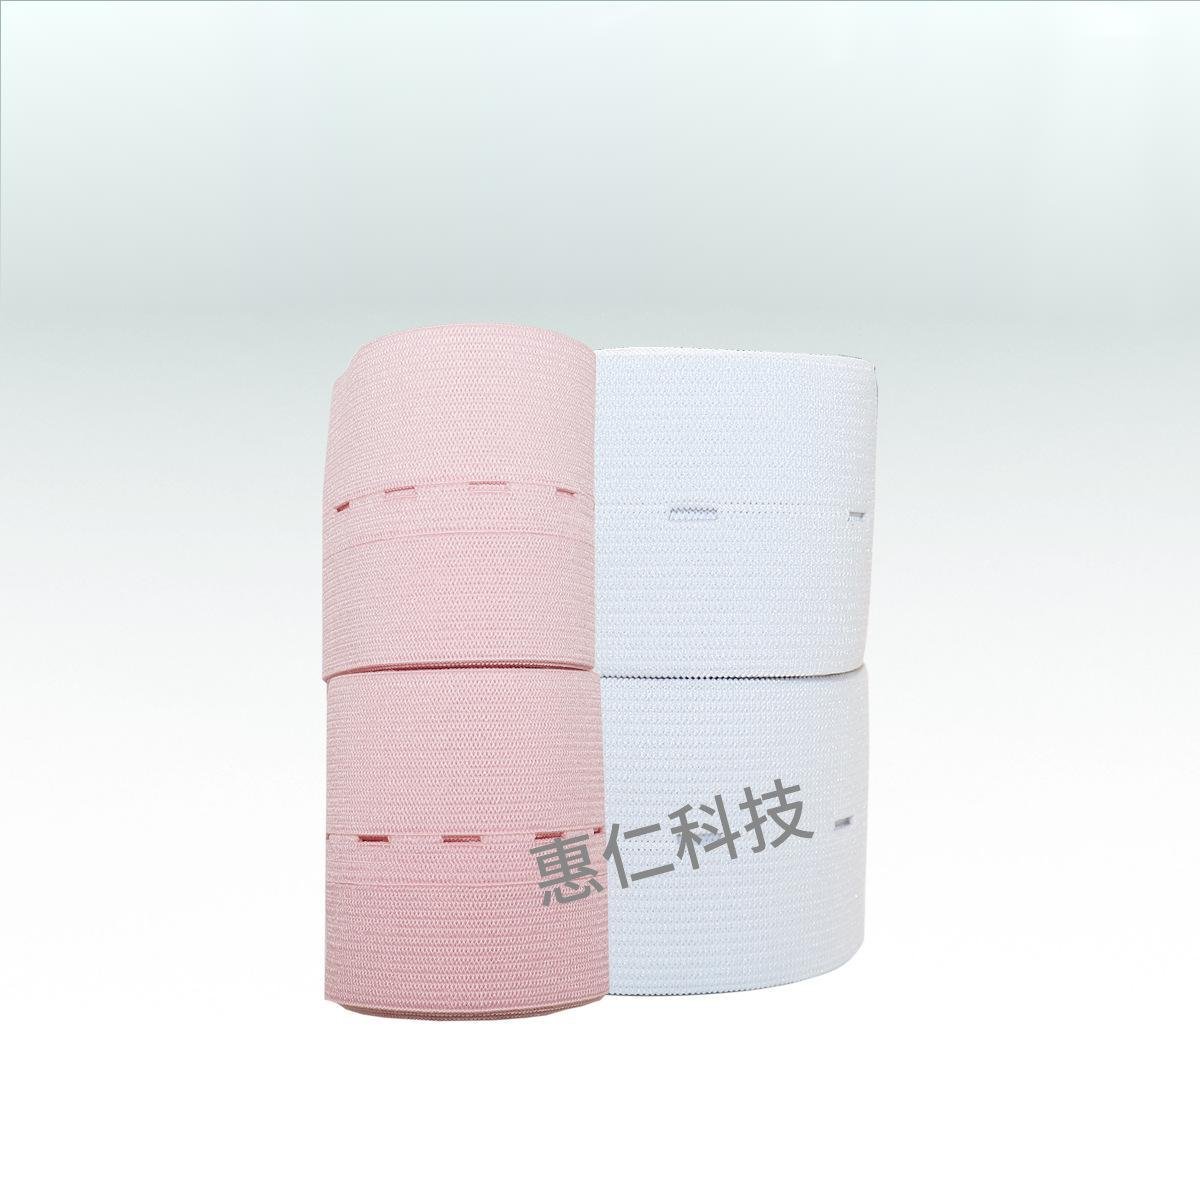 Disposable adjustable elastic band for prenatal white pink 2 pcs